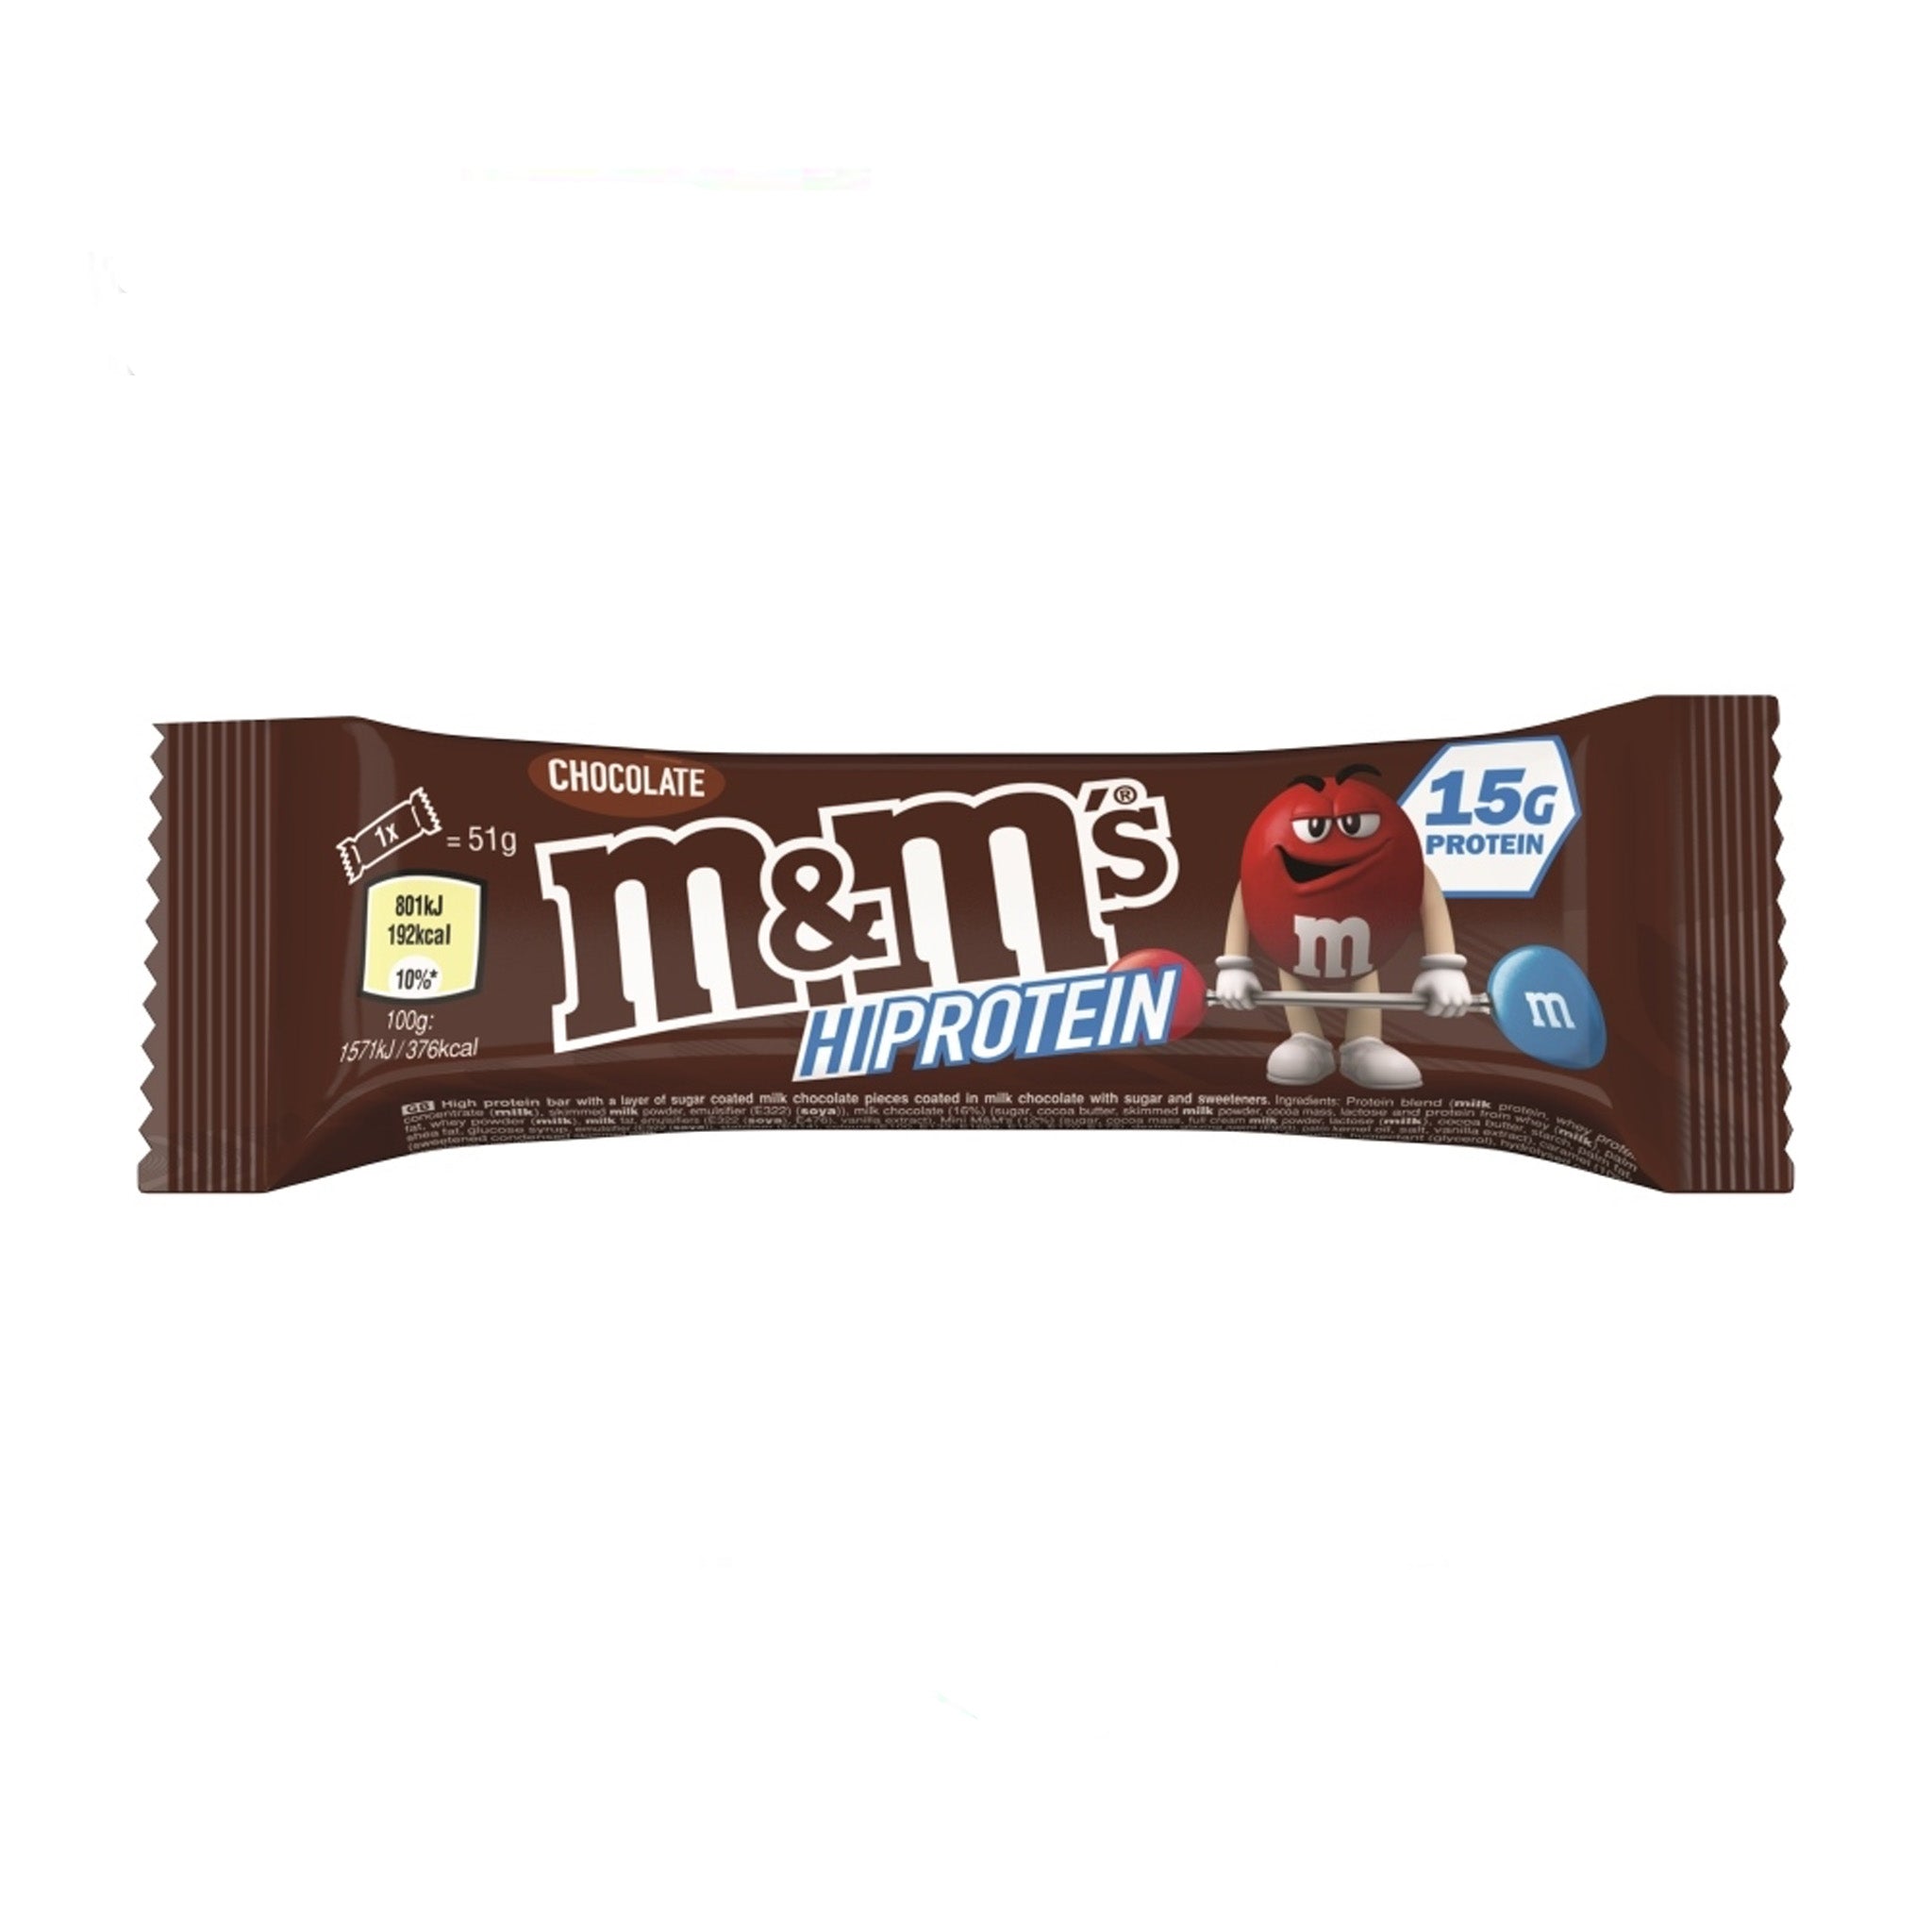 M&M's Hi-Protein Chocolate Bar (1 Bar)